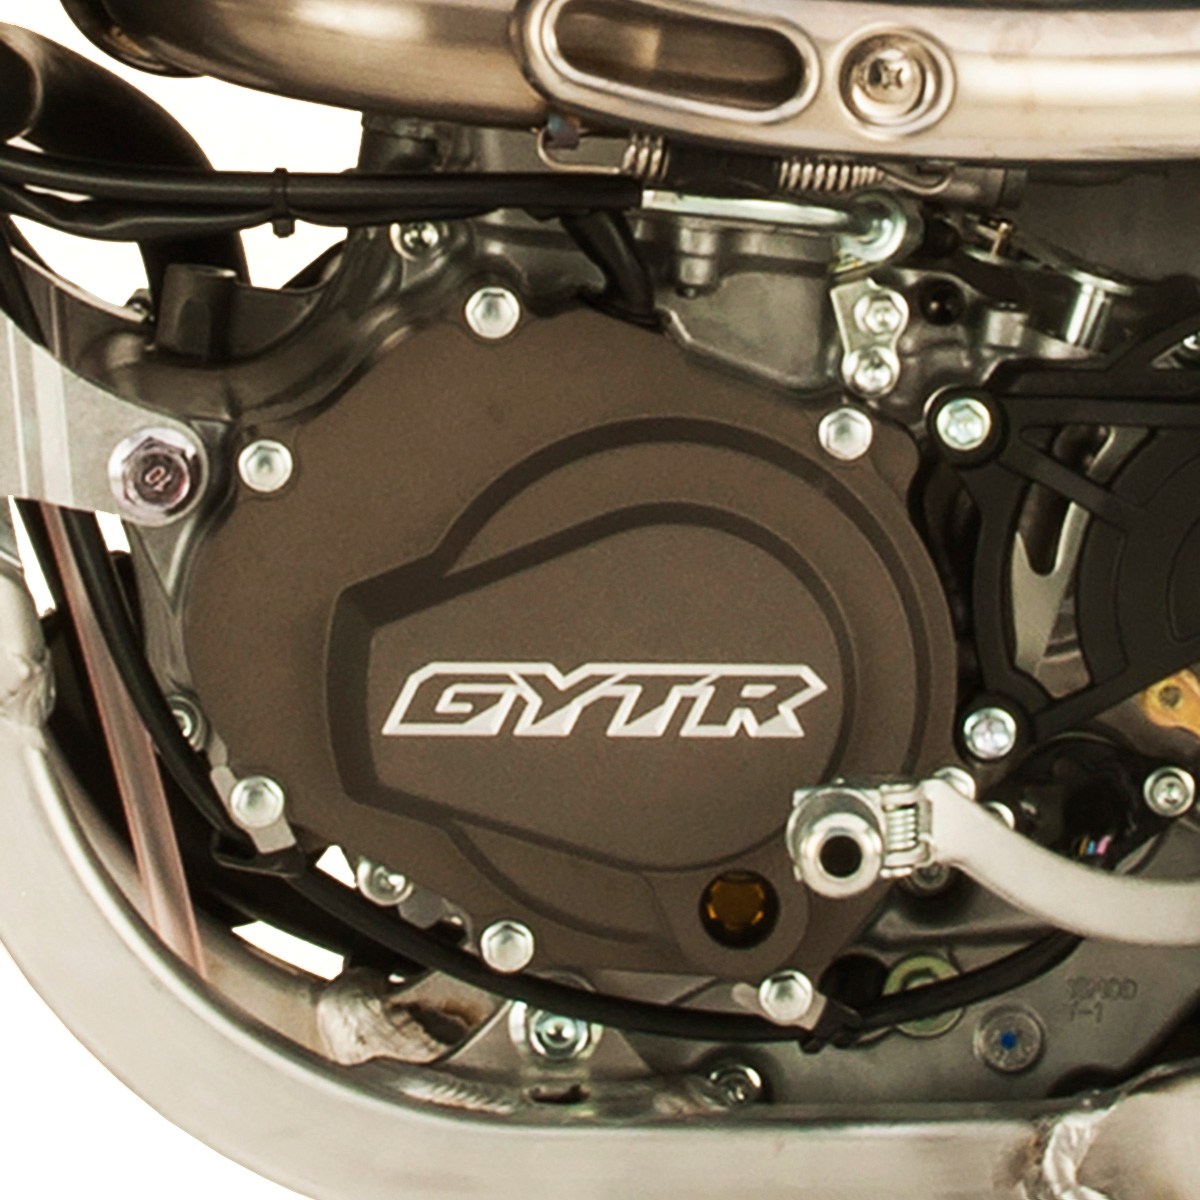 Yamaha GYTR YZ Motorcycle Cover